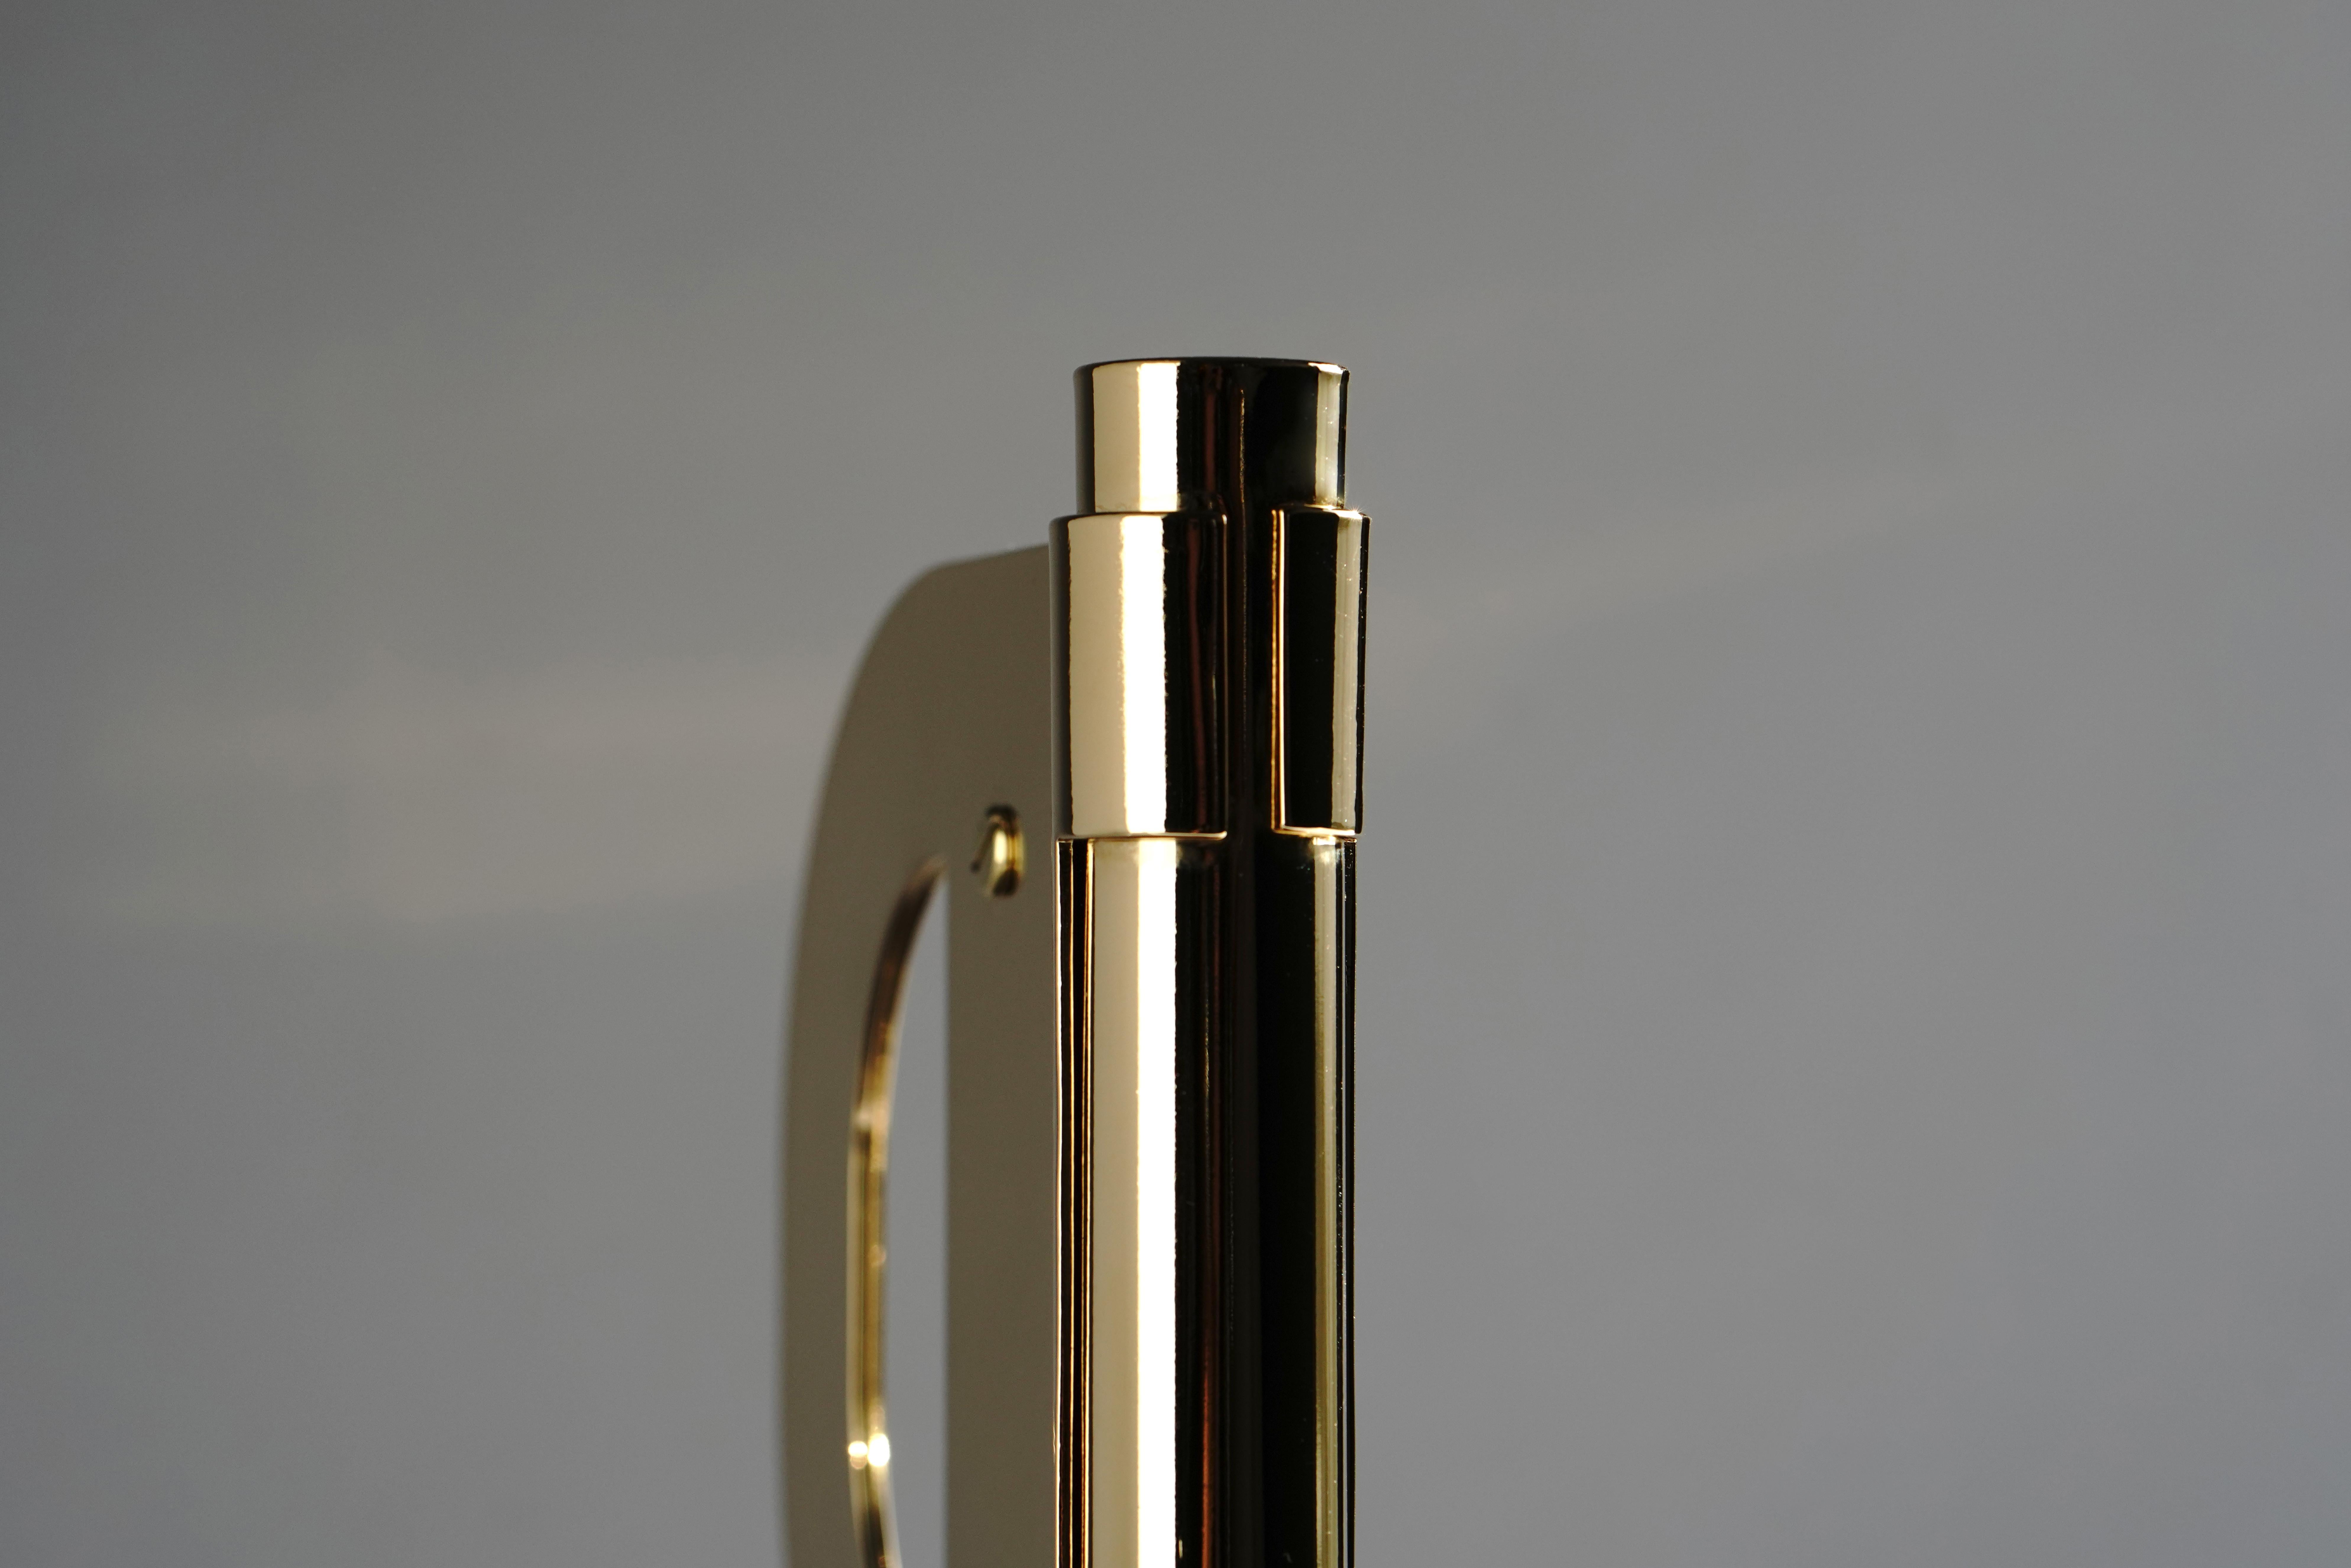 Art Deco Contemporary Dutch Design Harm De Veer Candleholder brass wood oak handmade For Sale